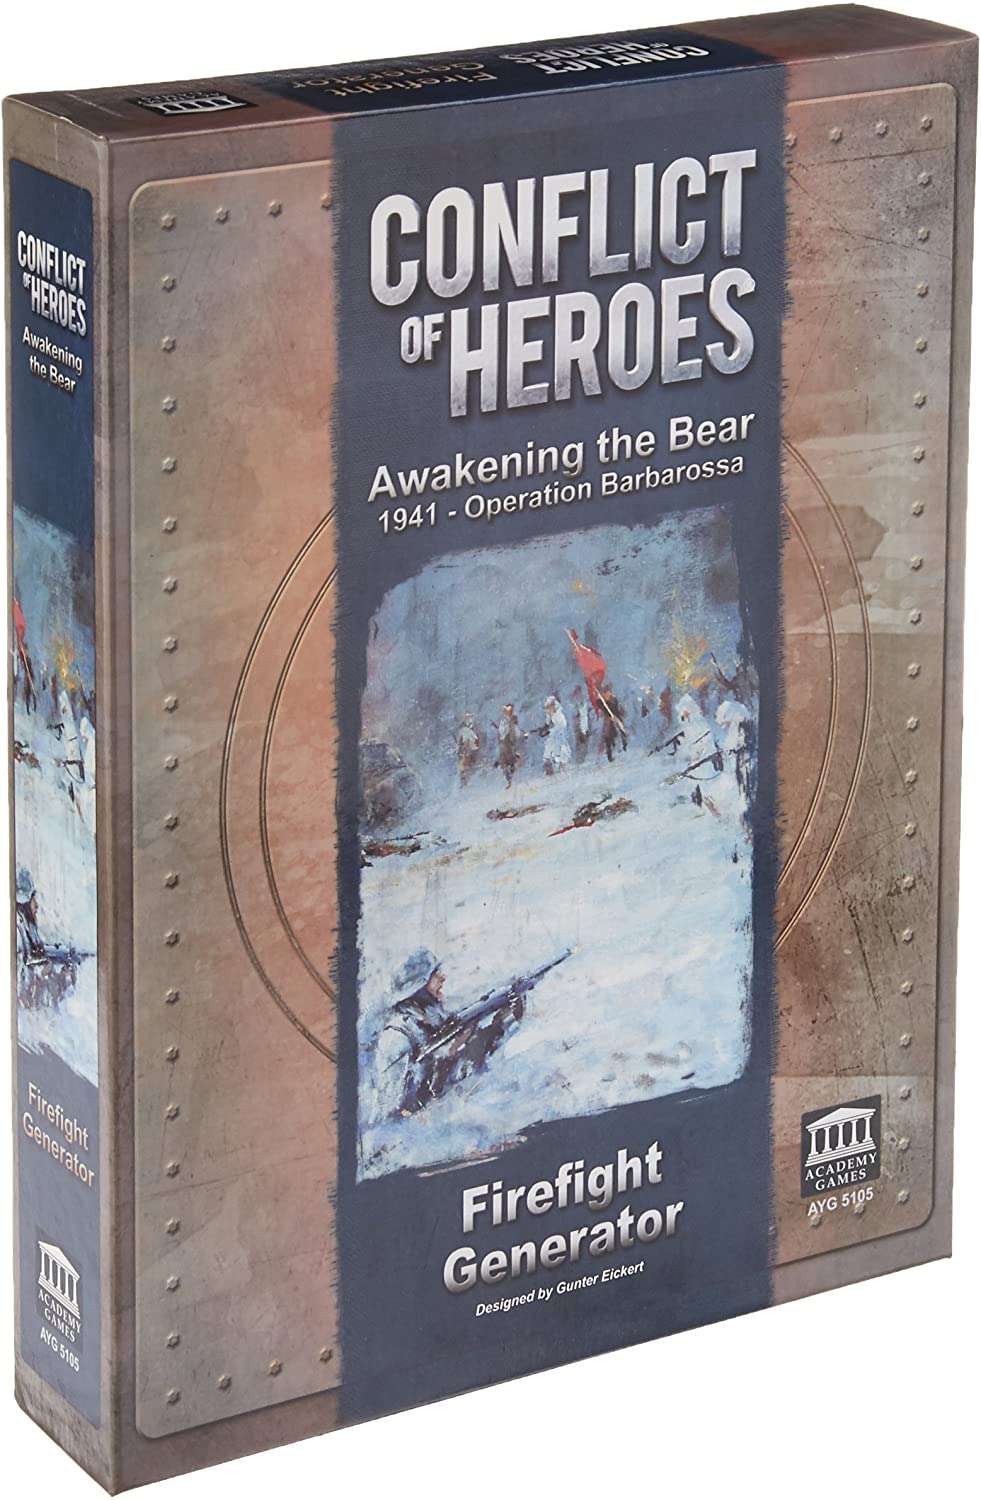 (BSG Certified USED) Conflict of Heroes: Awakening the Bear - Firefight Generator